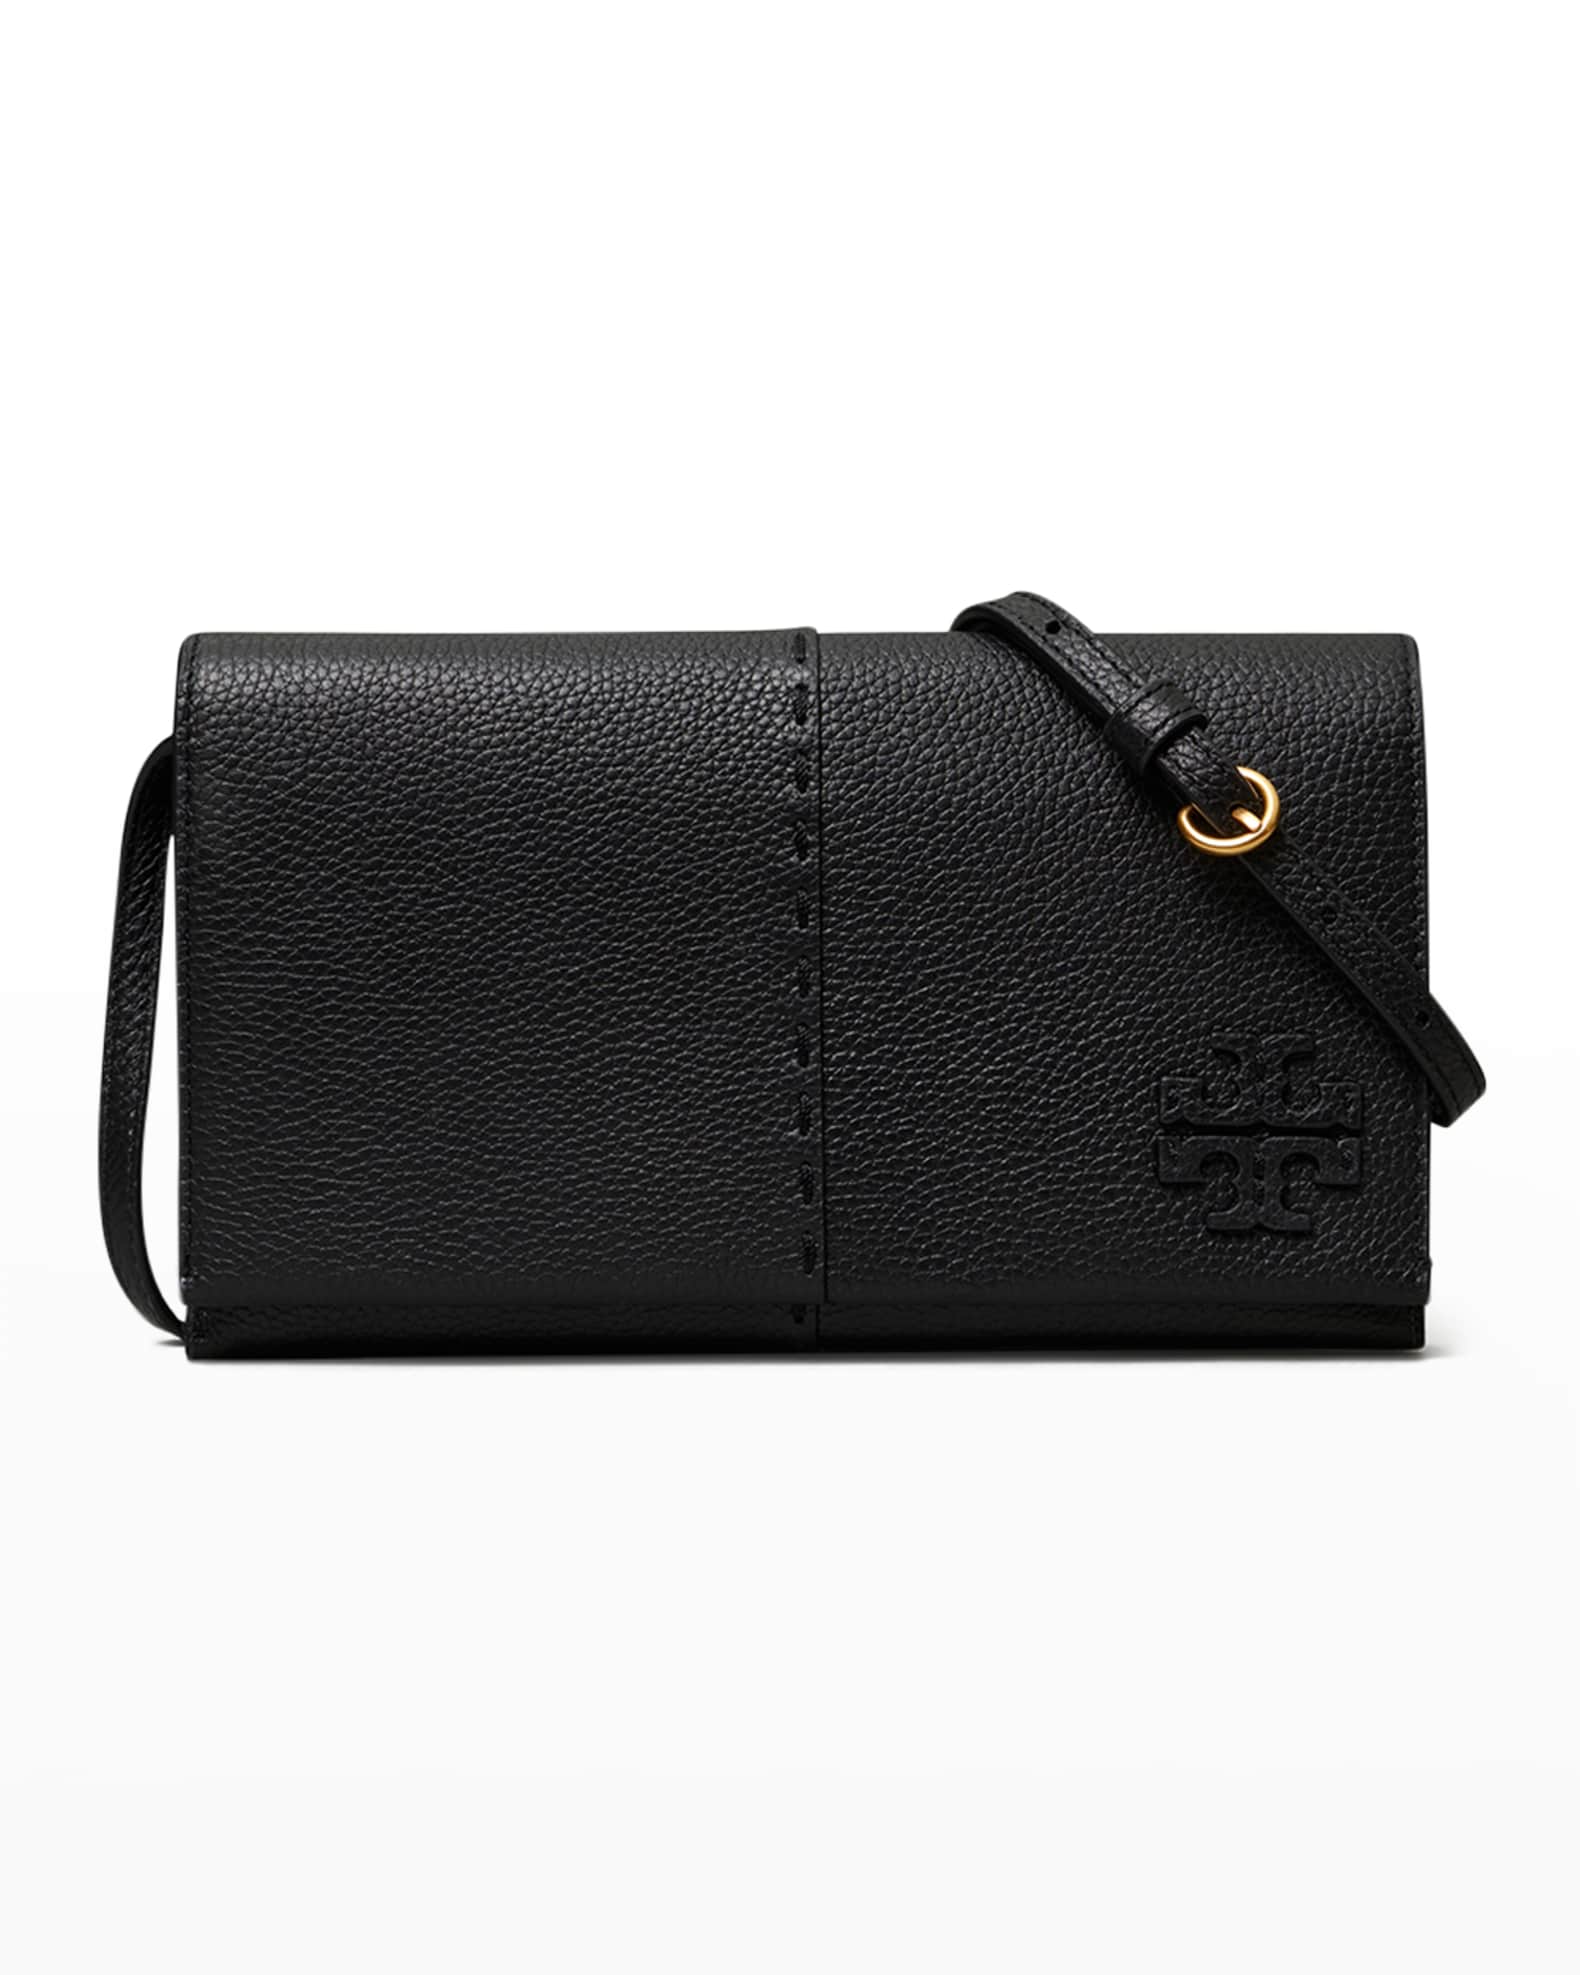 Tory Burch McGraw Wallet Leather Crossbody Bag | Neiman Marcus